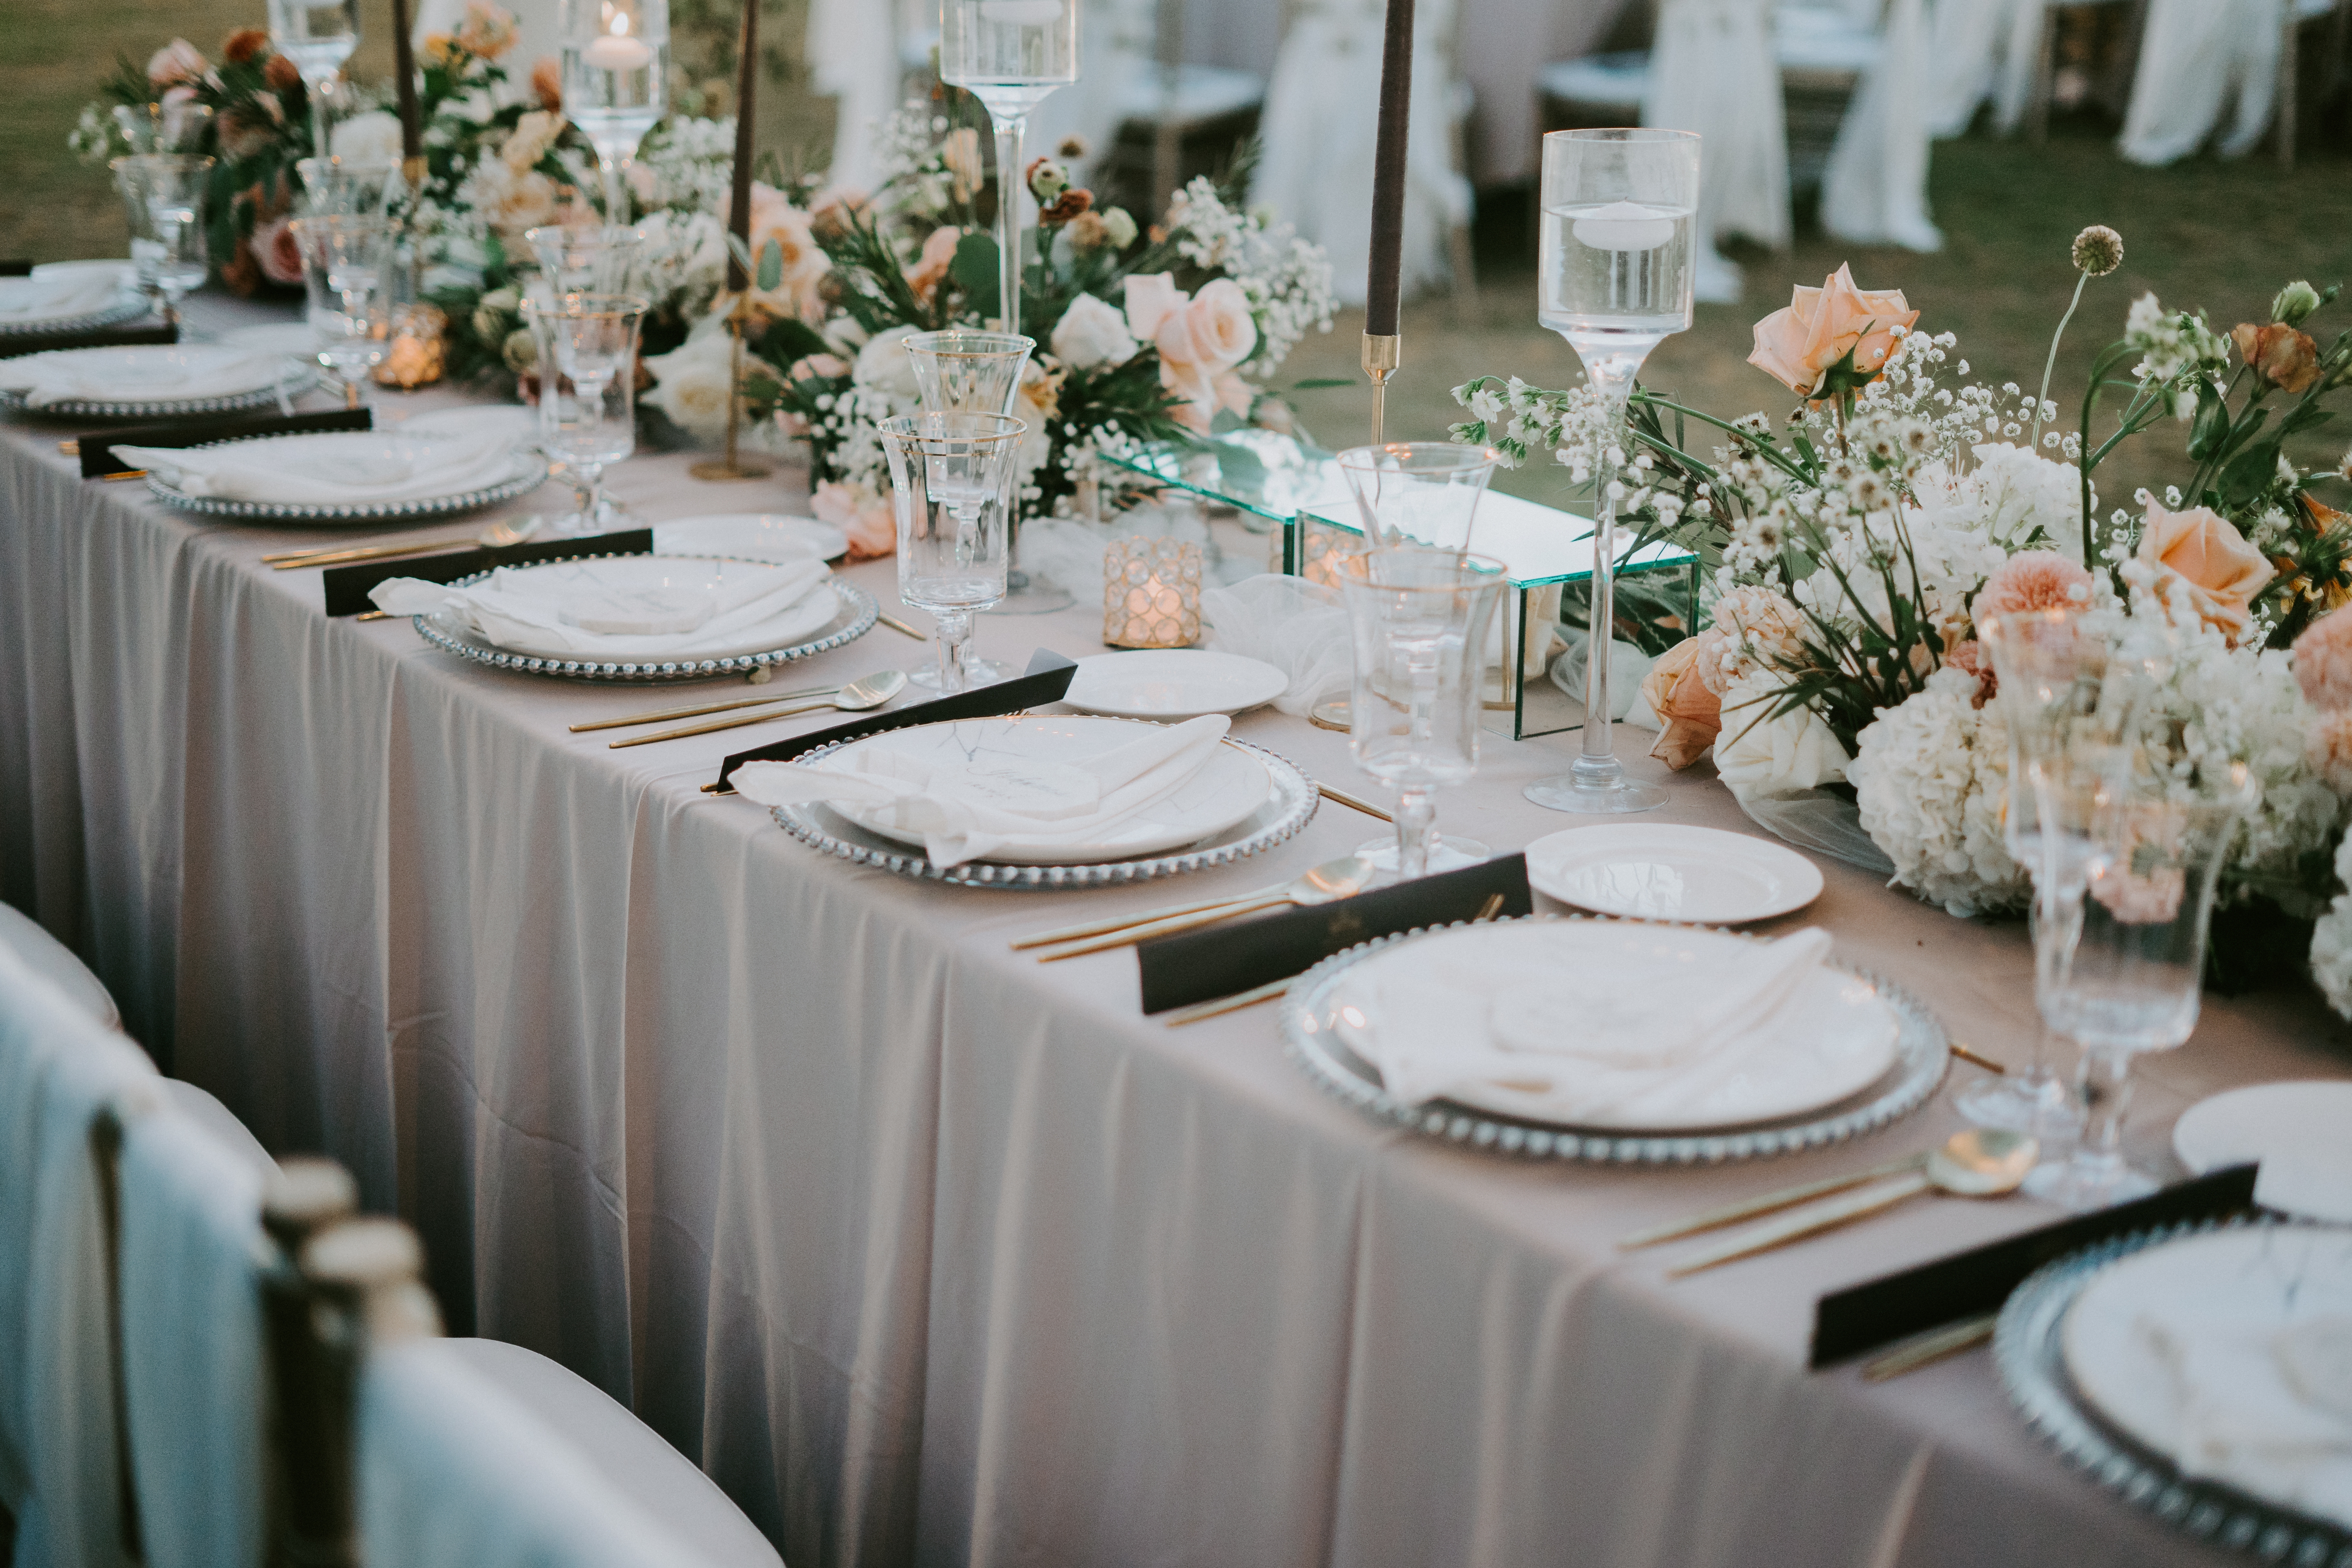 decorated-table-setting-for-wedding-celebration.jpg